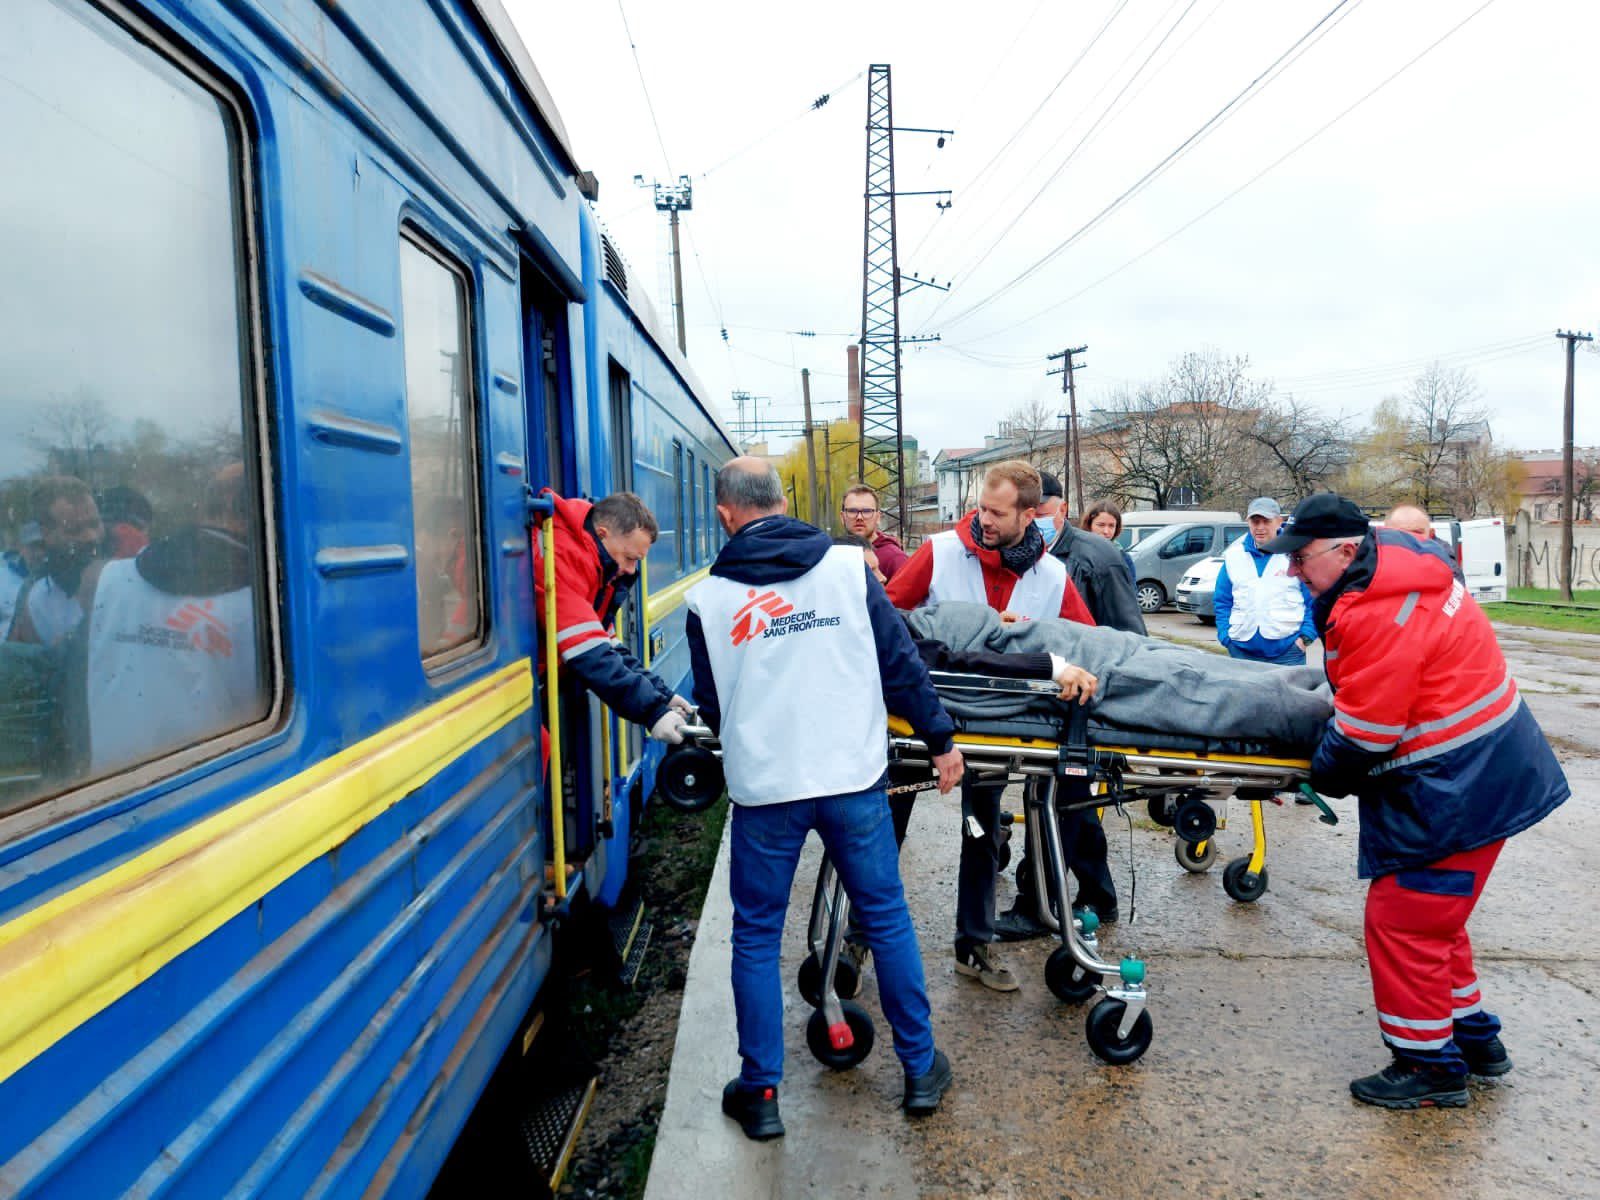 Hospital evacuation train in Ukraine 